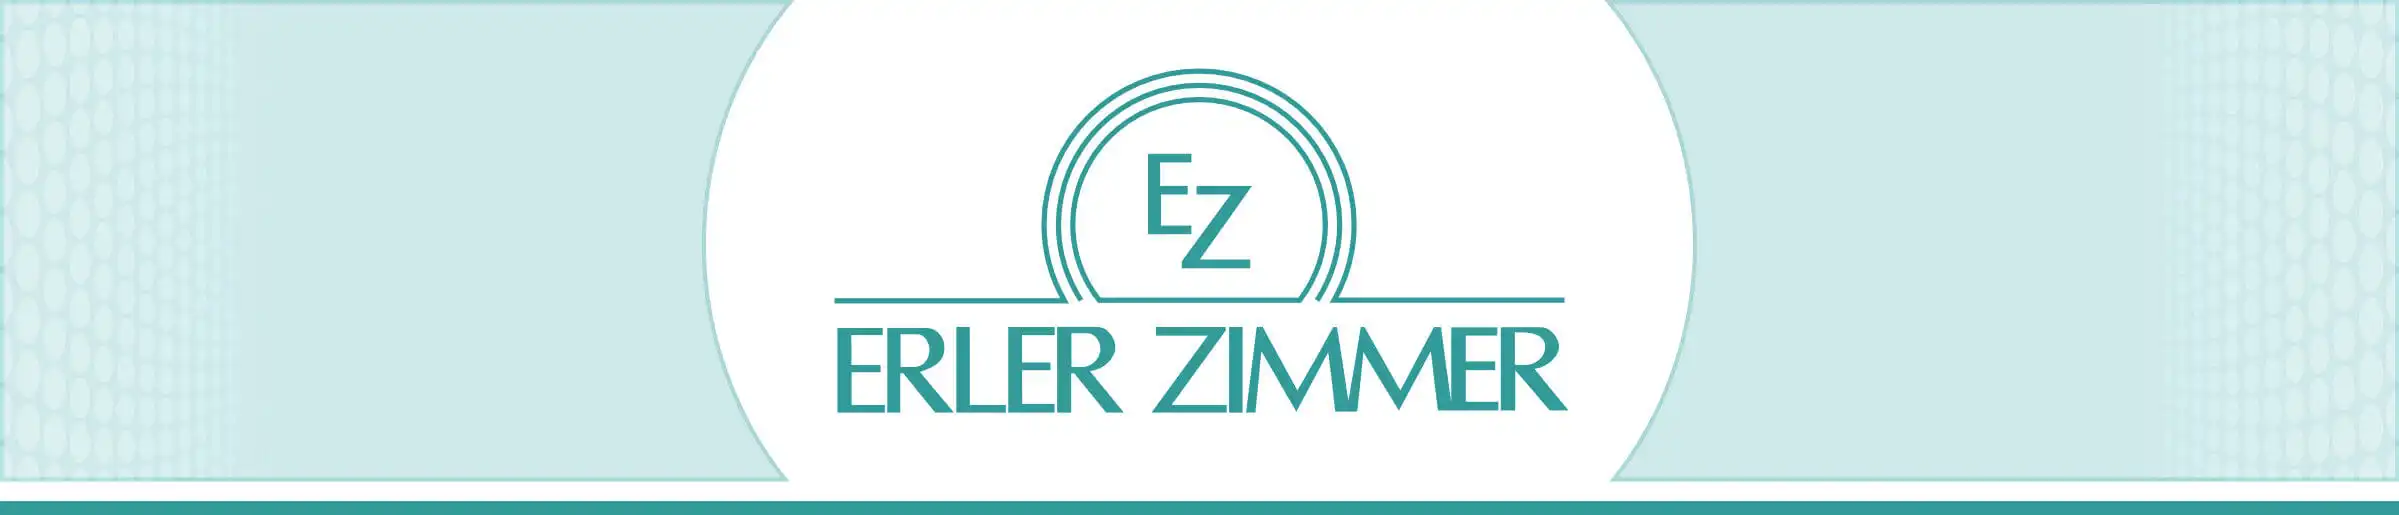 Erler-Zimmer_Header_desktop.webp